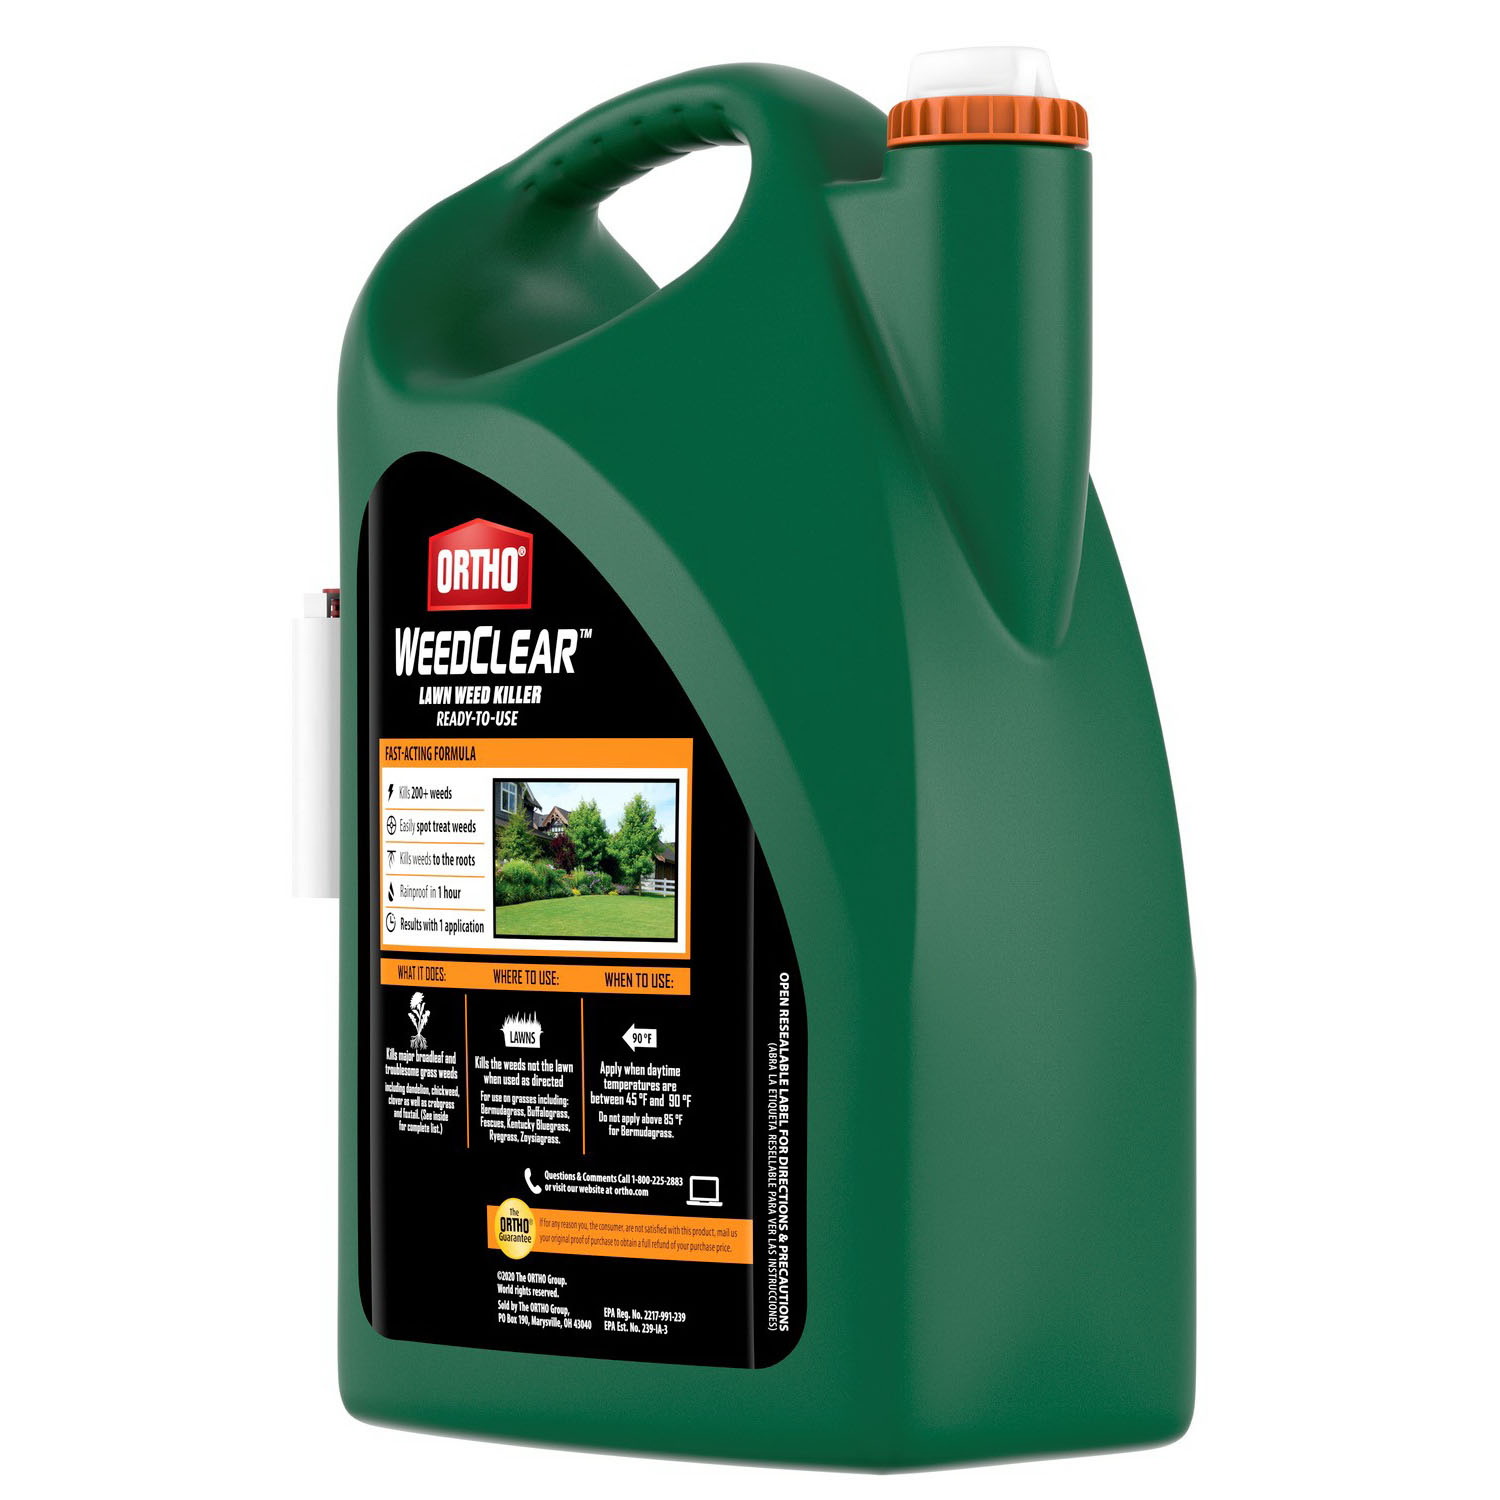 Ortho WeedClear 0446505 Ready-To-Use Lawn Weed Killer, Liquid, Spray Application, 1.1 gal Jug - 4